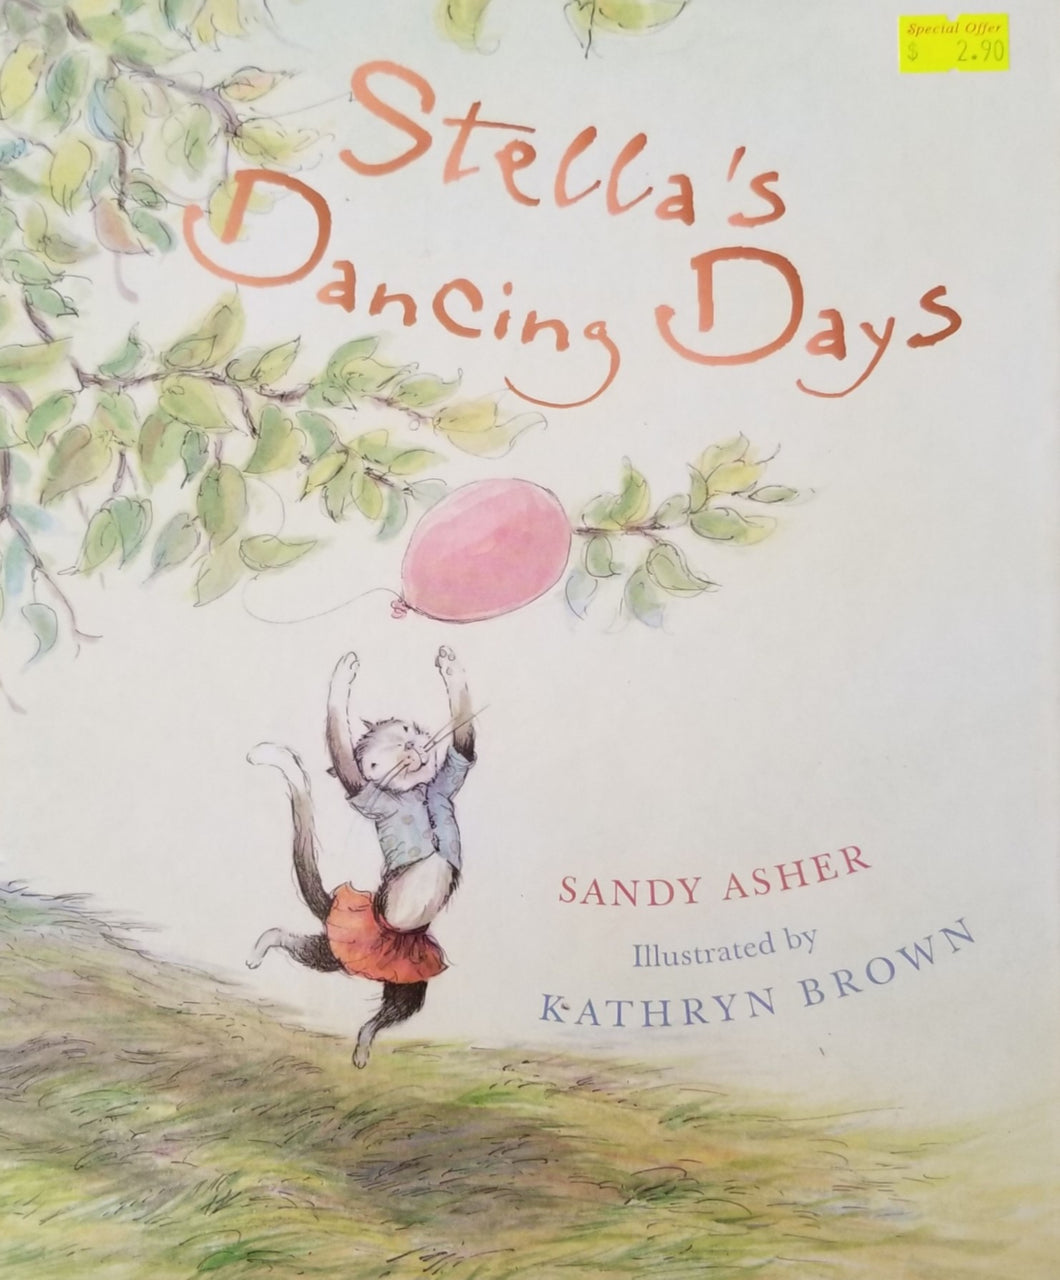 Stella's Dancing Days - Sandy Asher & Kathryn Brown